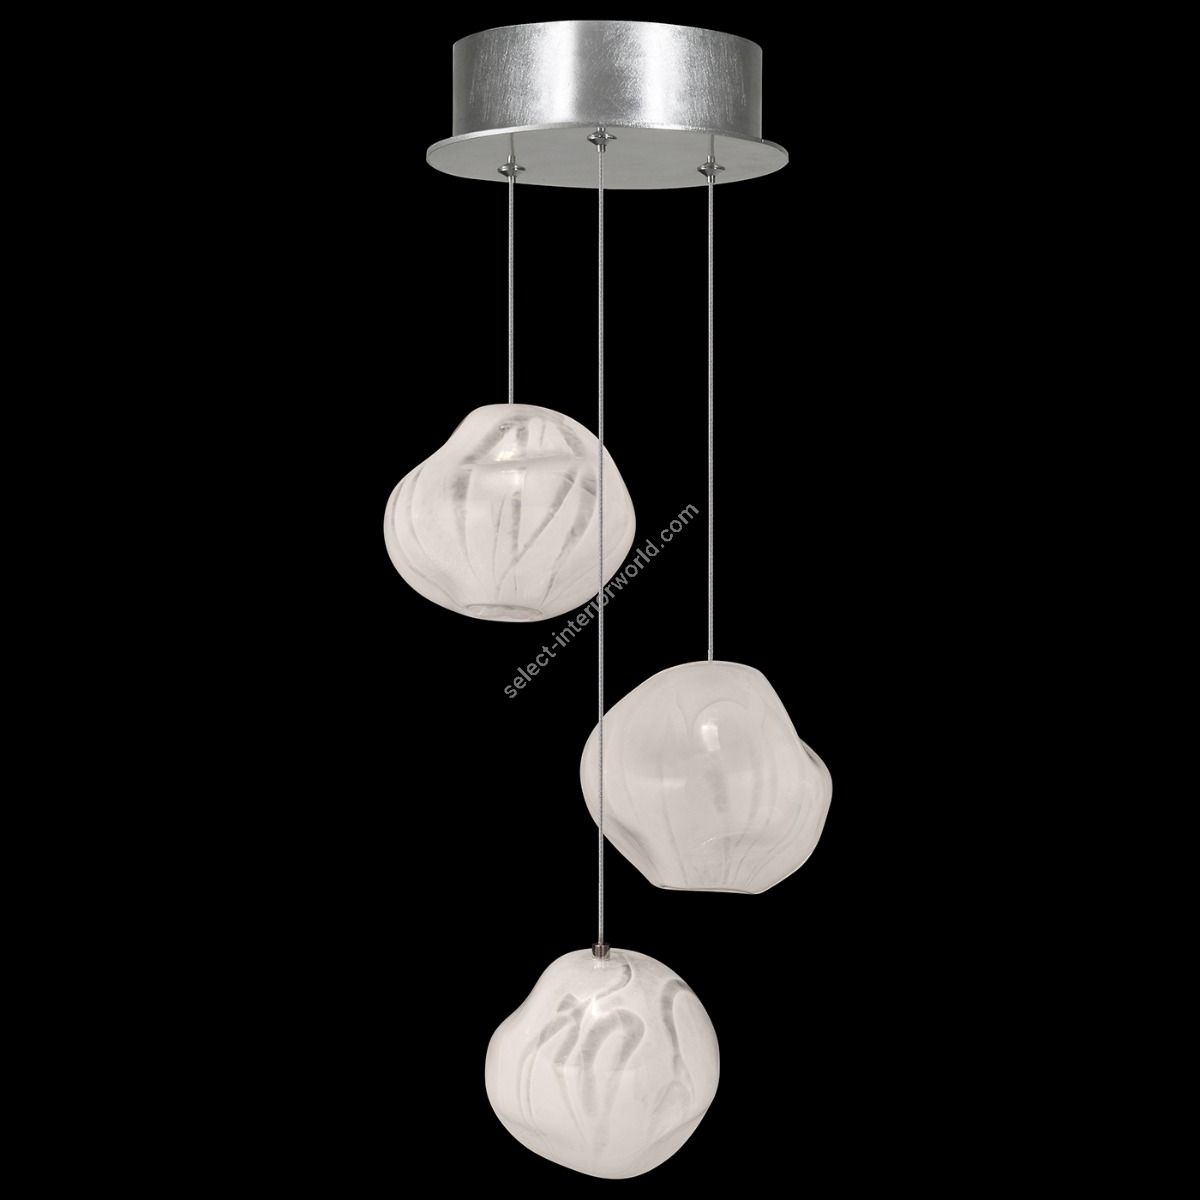 Vesta 9″ Round Pendant Light 866240 by Fine Art Handcrafted Lighting